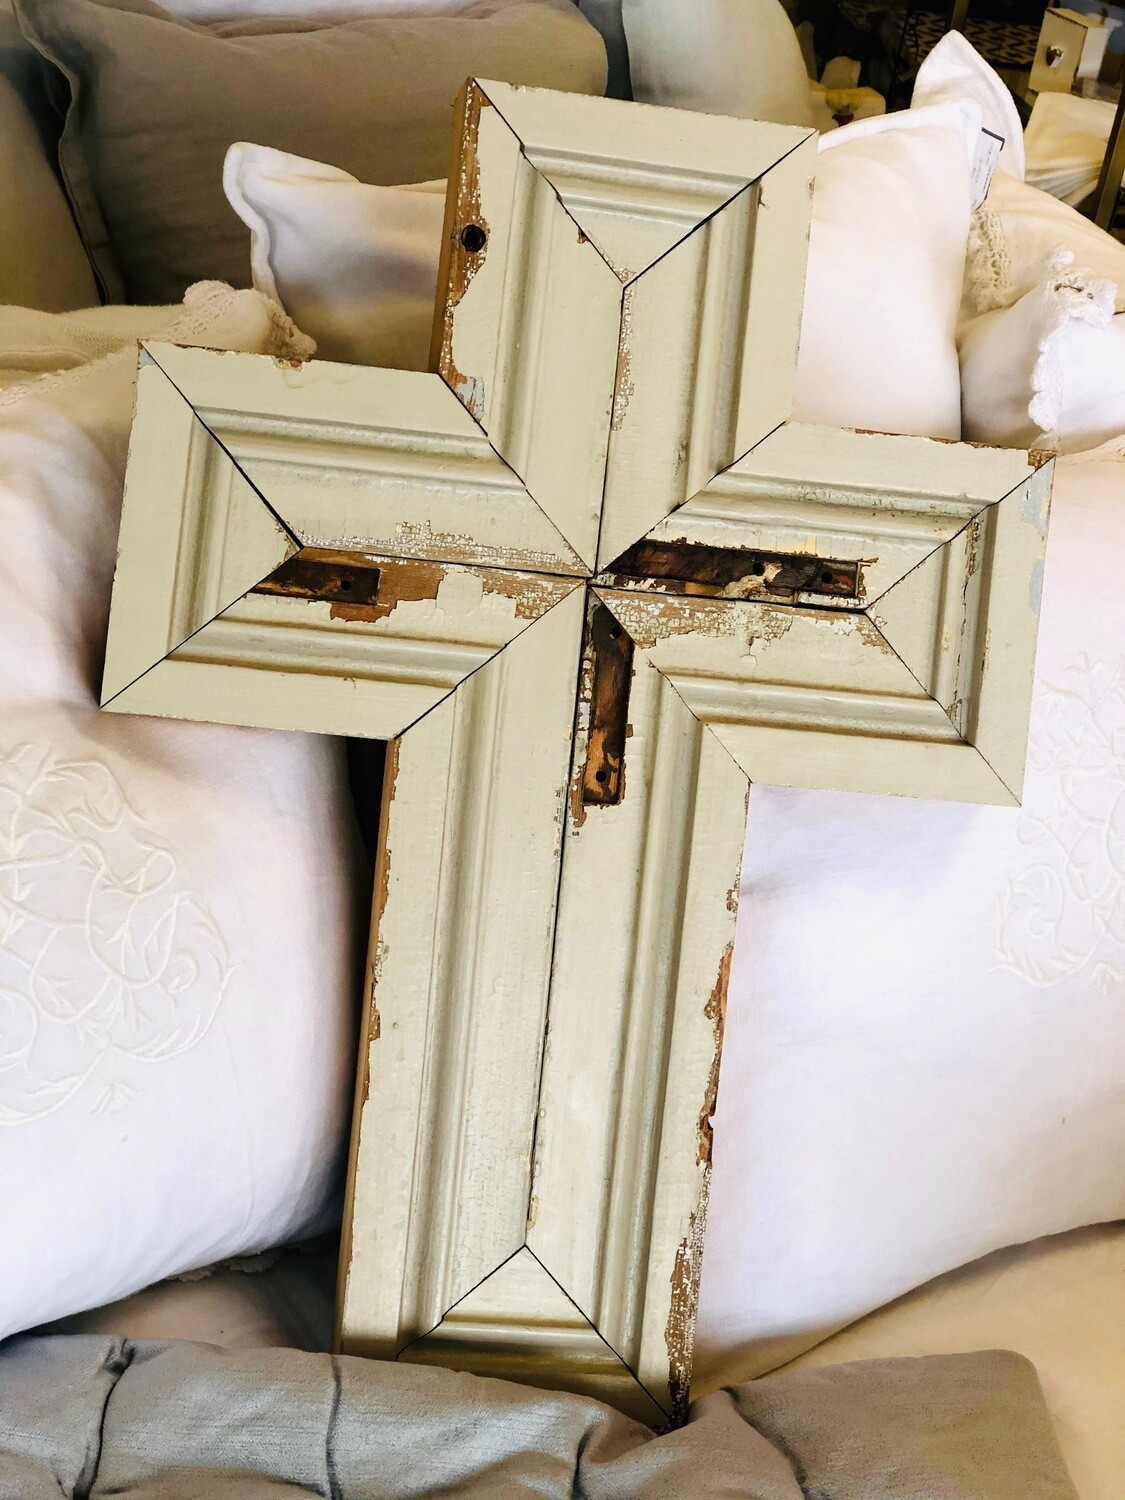 Wood Decor "Old Rugged Cross"